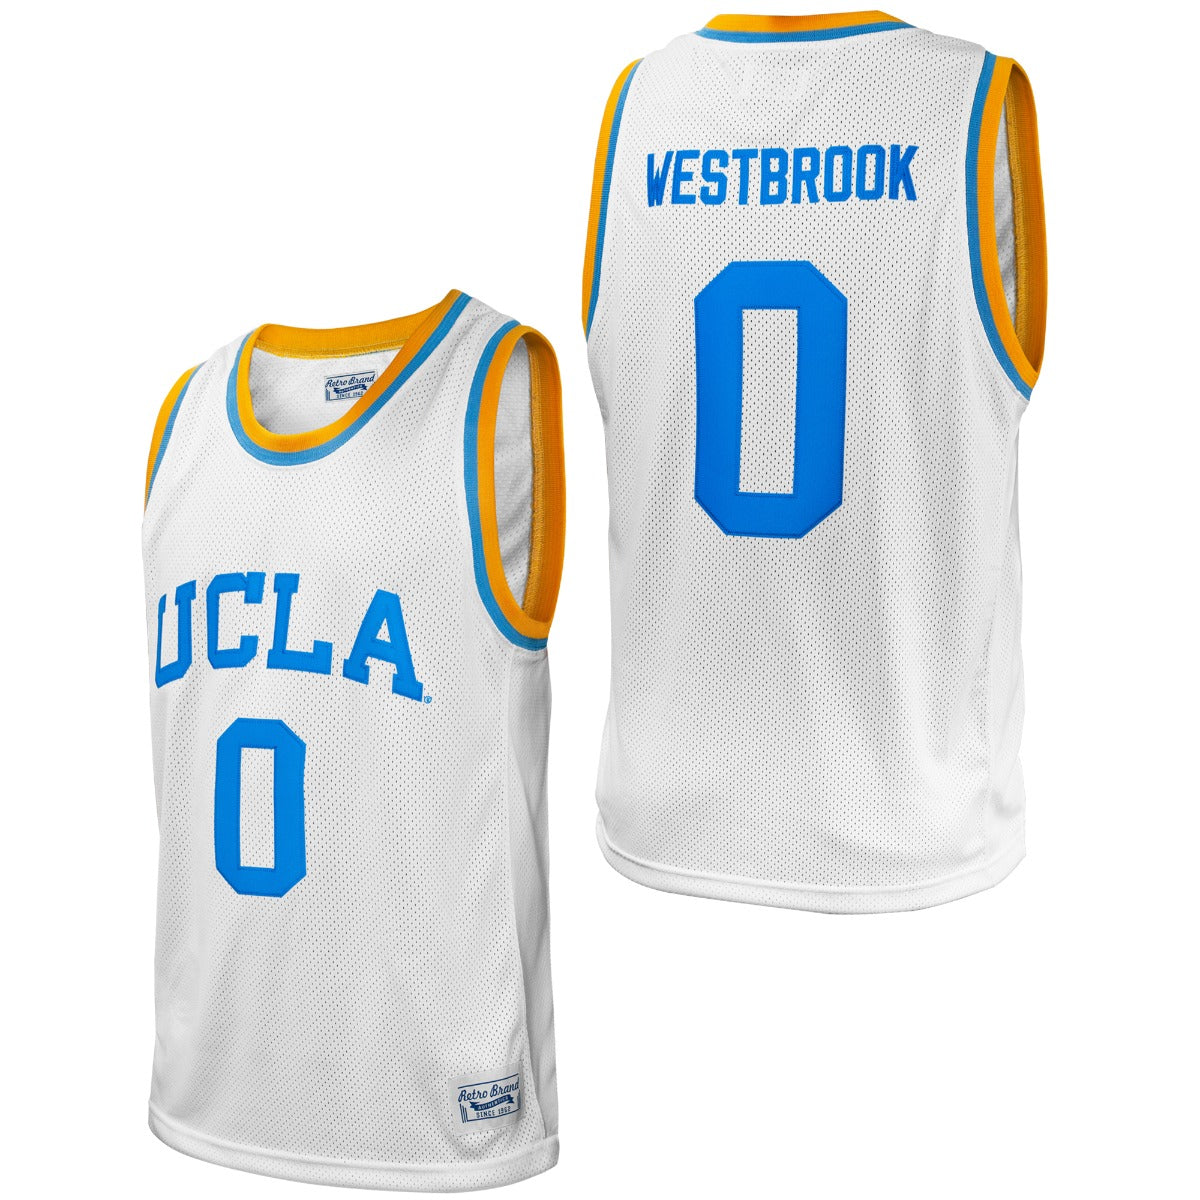 Men's Original Retro Brand Russell Westbrook White UCLA Bruins  Commemorative Classic Basketball Jersey